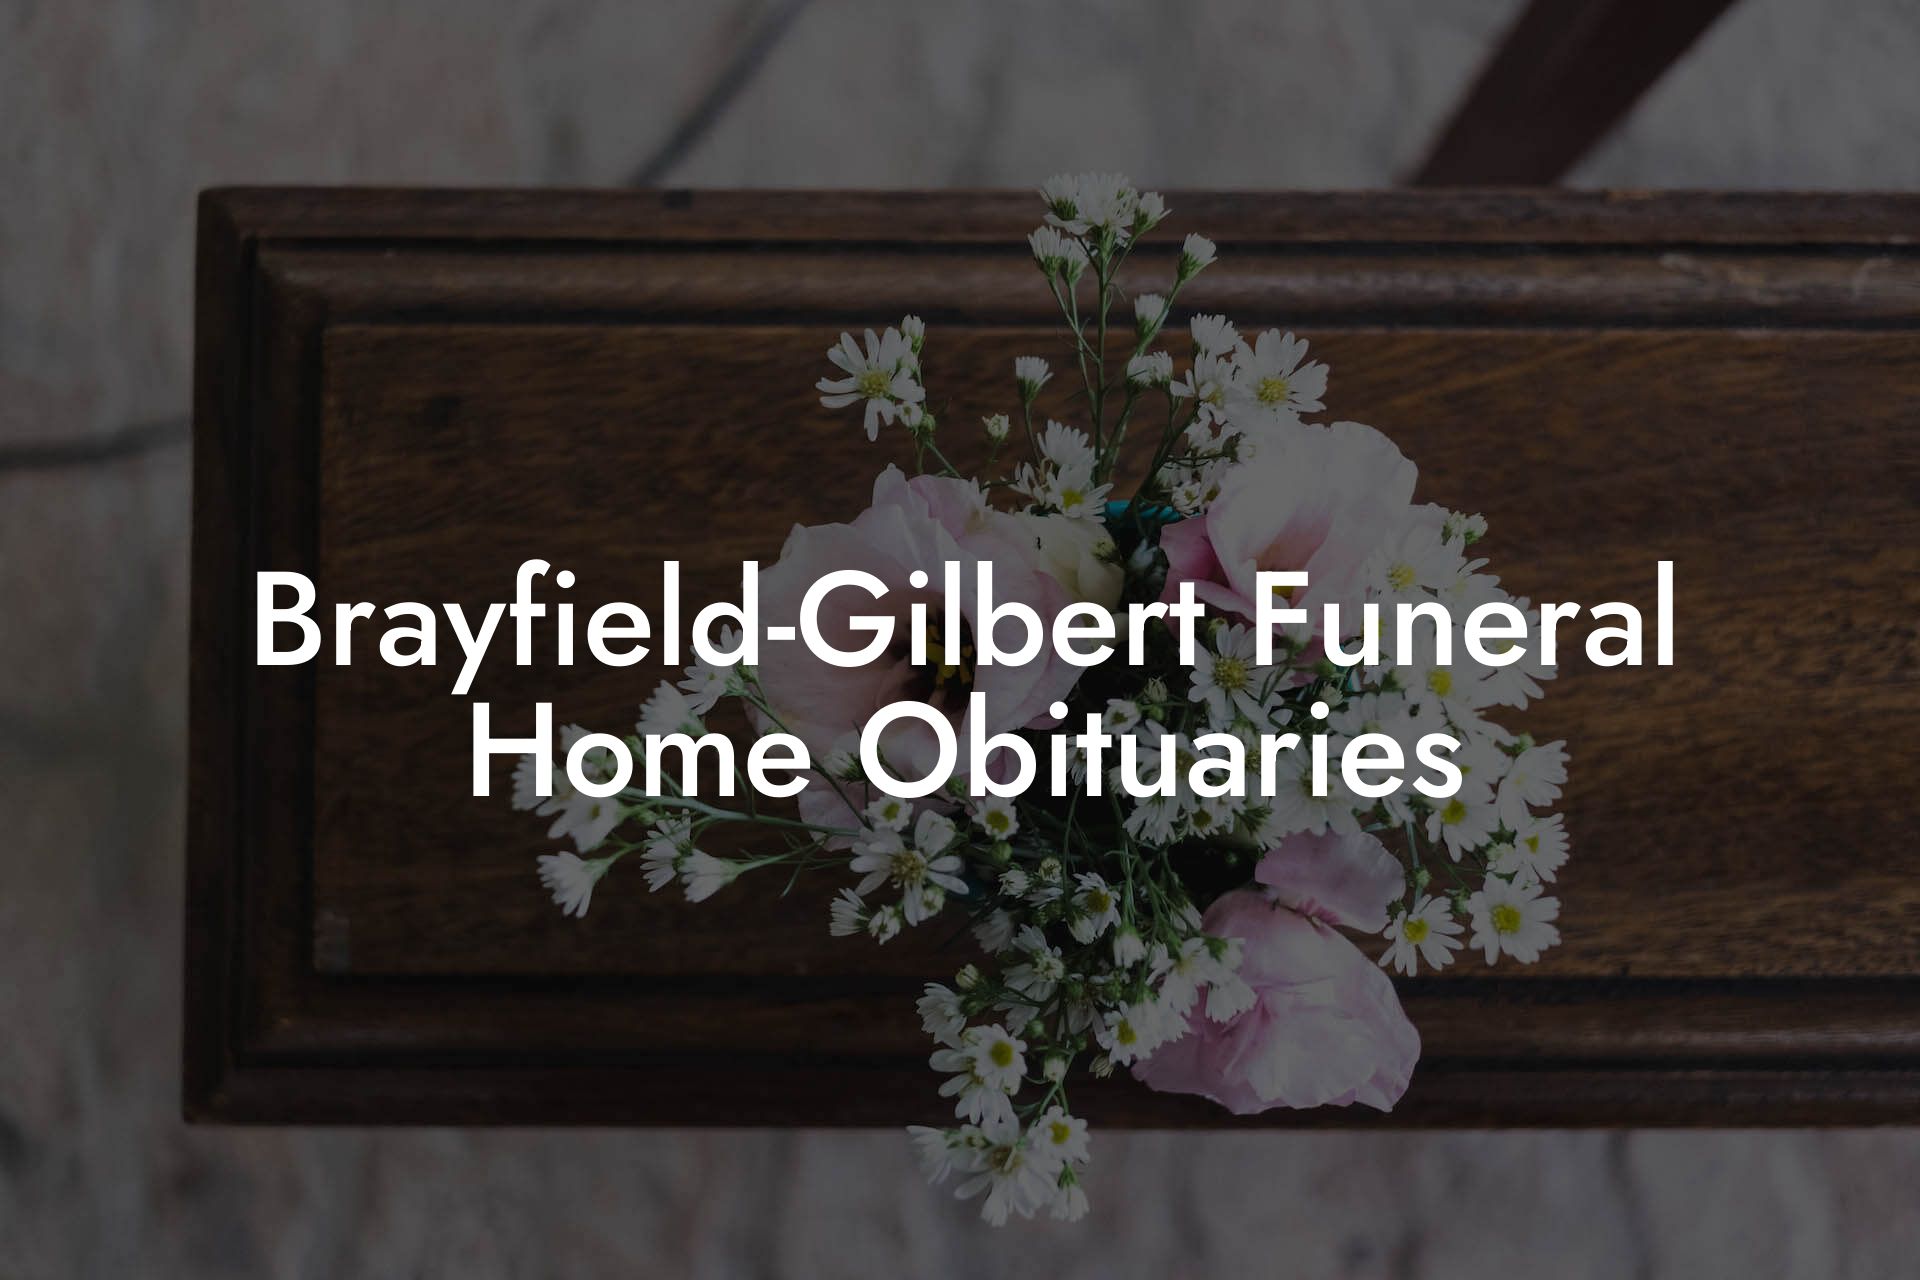 Brayfield-Gilbert Funeral Home Obituaries